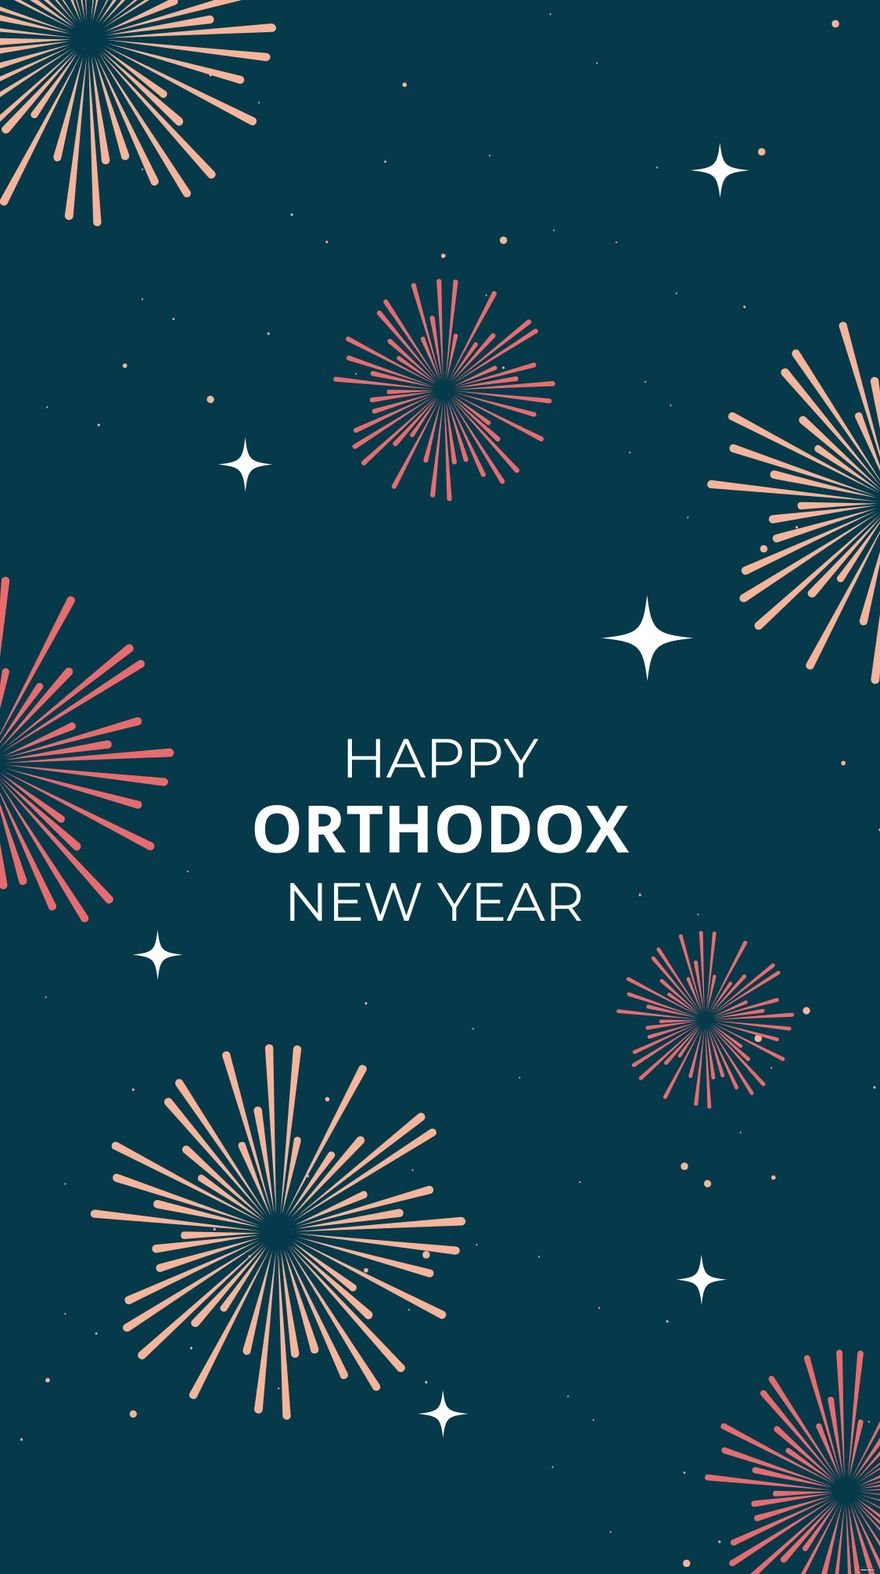 Free Orthodox New Year iPhone Background